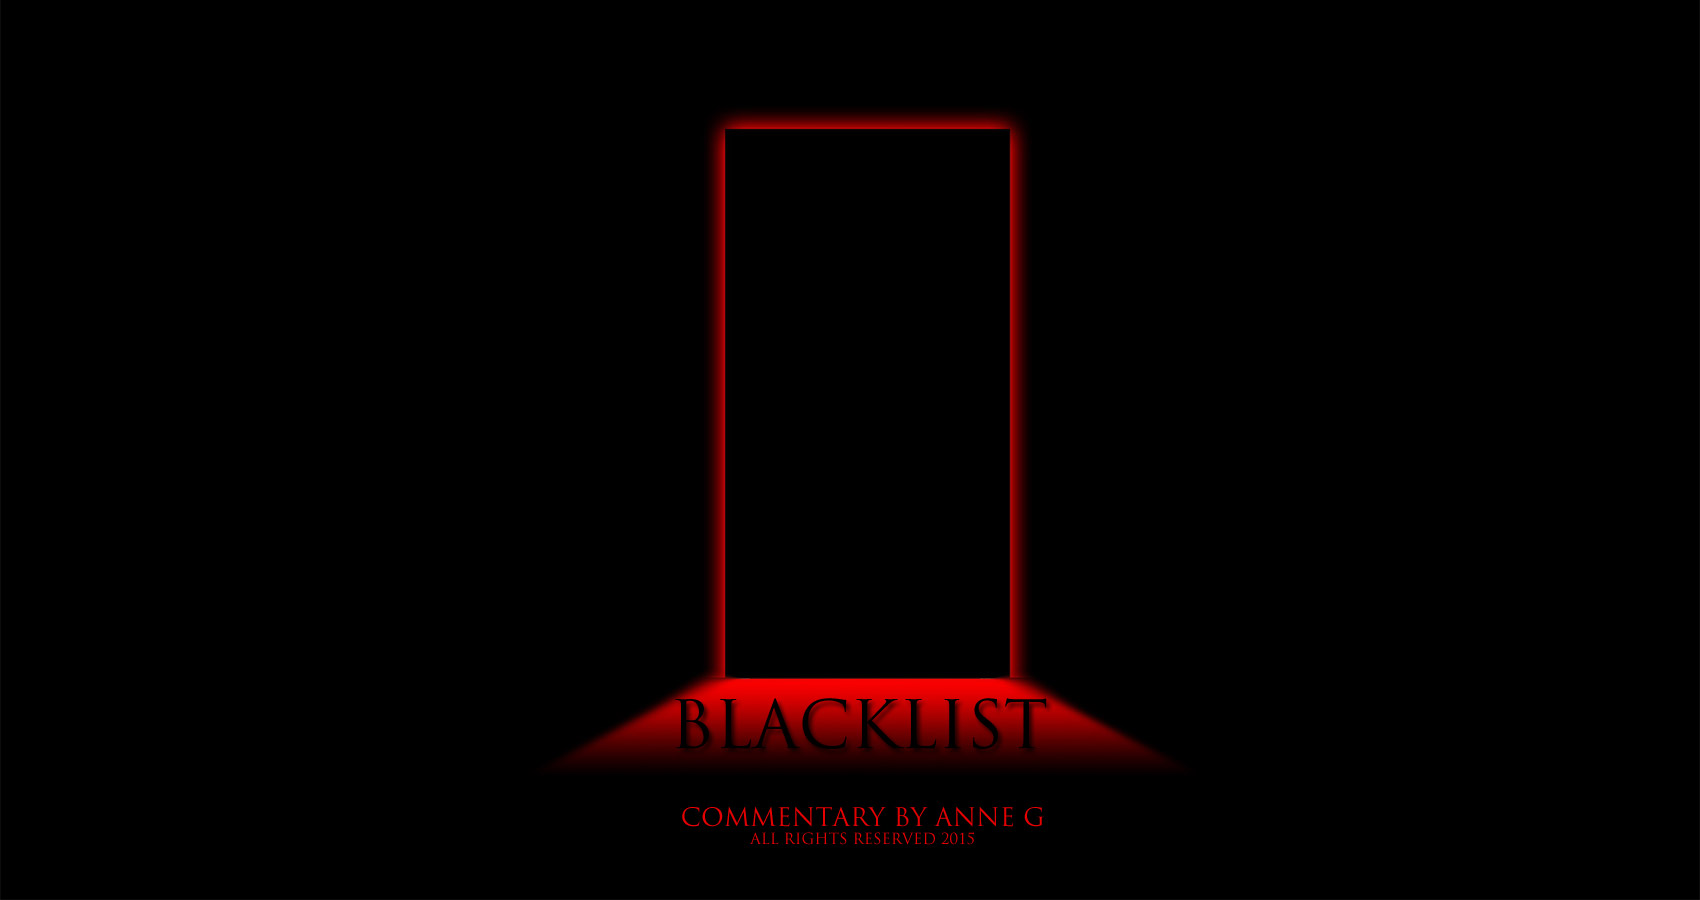 Blacklist at spillwords.com by Anne G